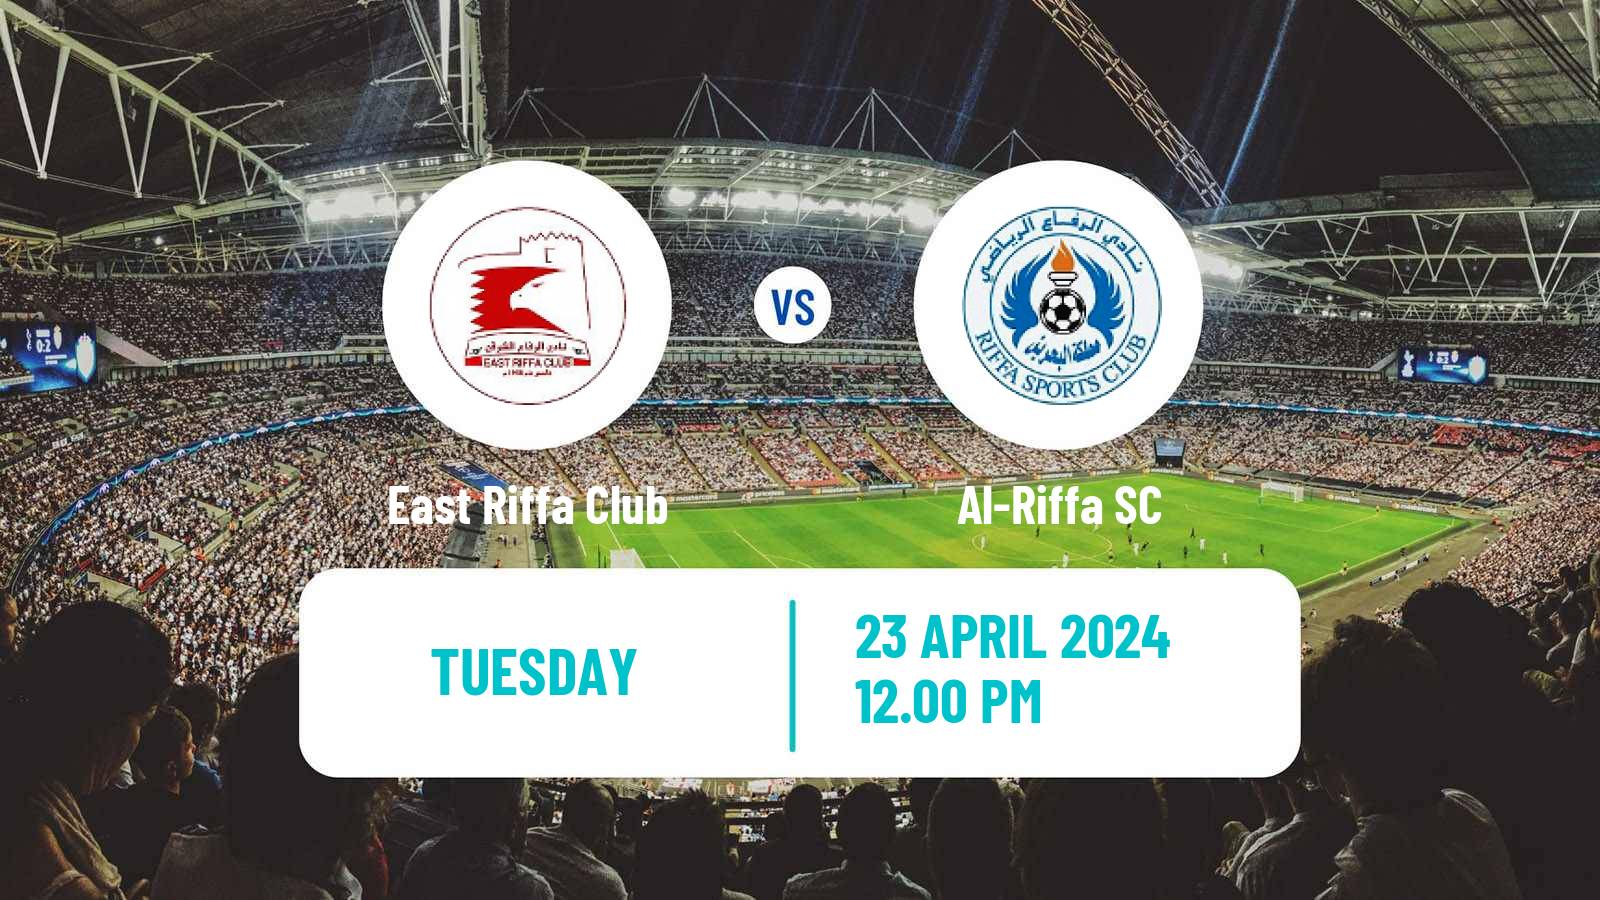 Soccer Bahraini Premier League East Riffa Club - Al-Riffa